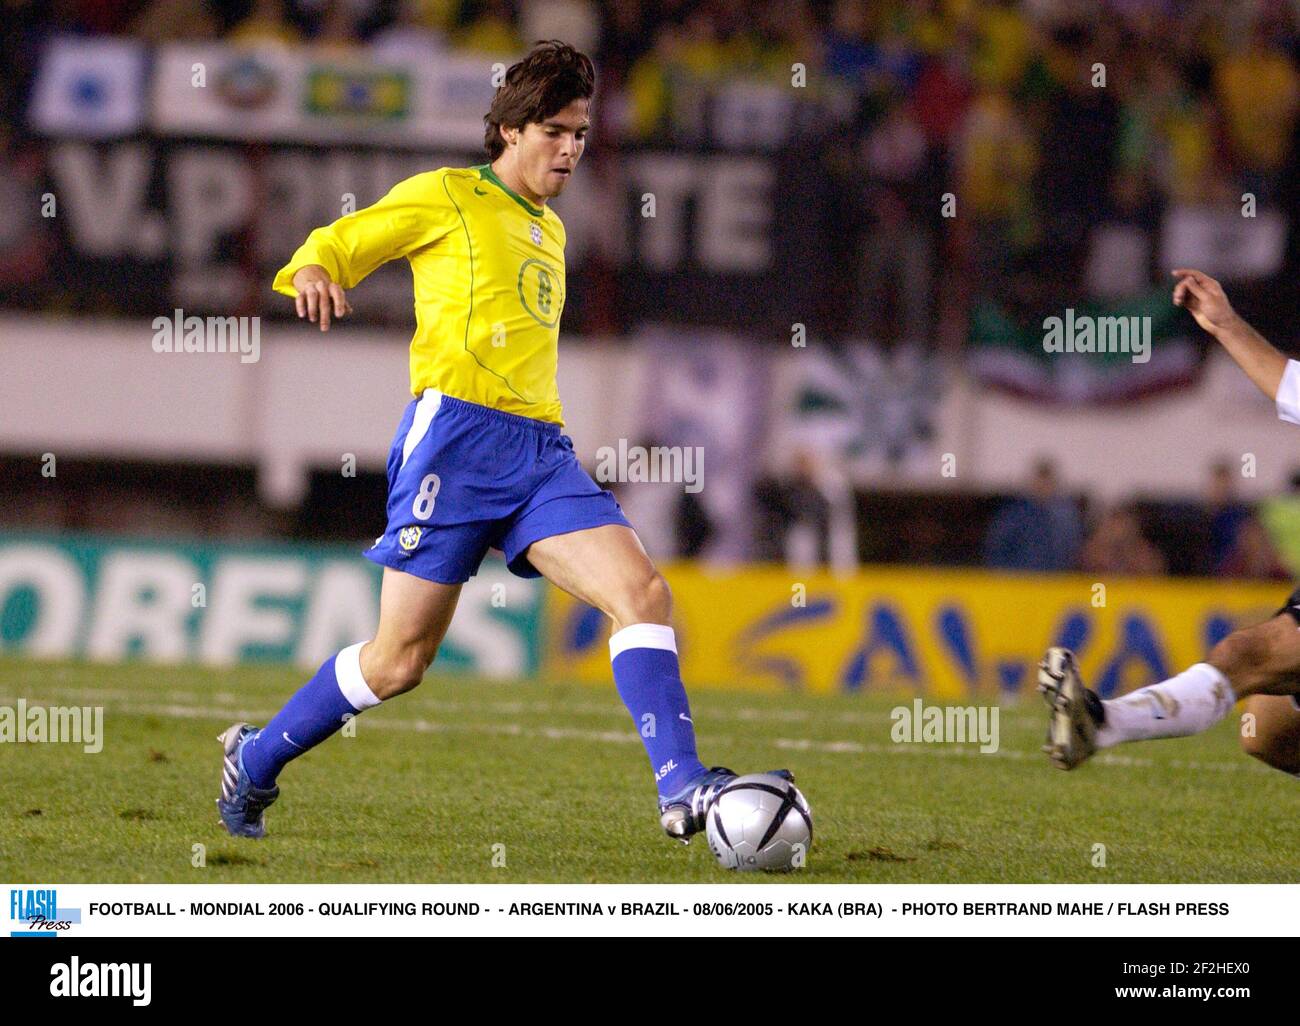 FOOTBALL - MONDIAL 2006 - QUALIFYING ROUND - - ARGENTINA v BRAZIL - 08/06/2005 - KAKA (BRA) - PHOTO BERTRAND MAHE / FLASH PRESS Stock Photo